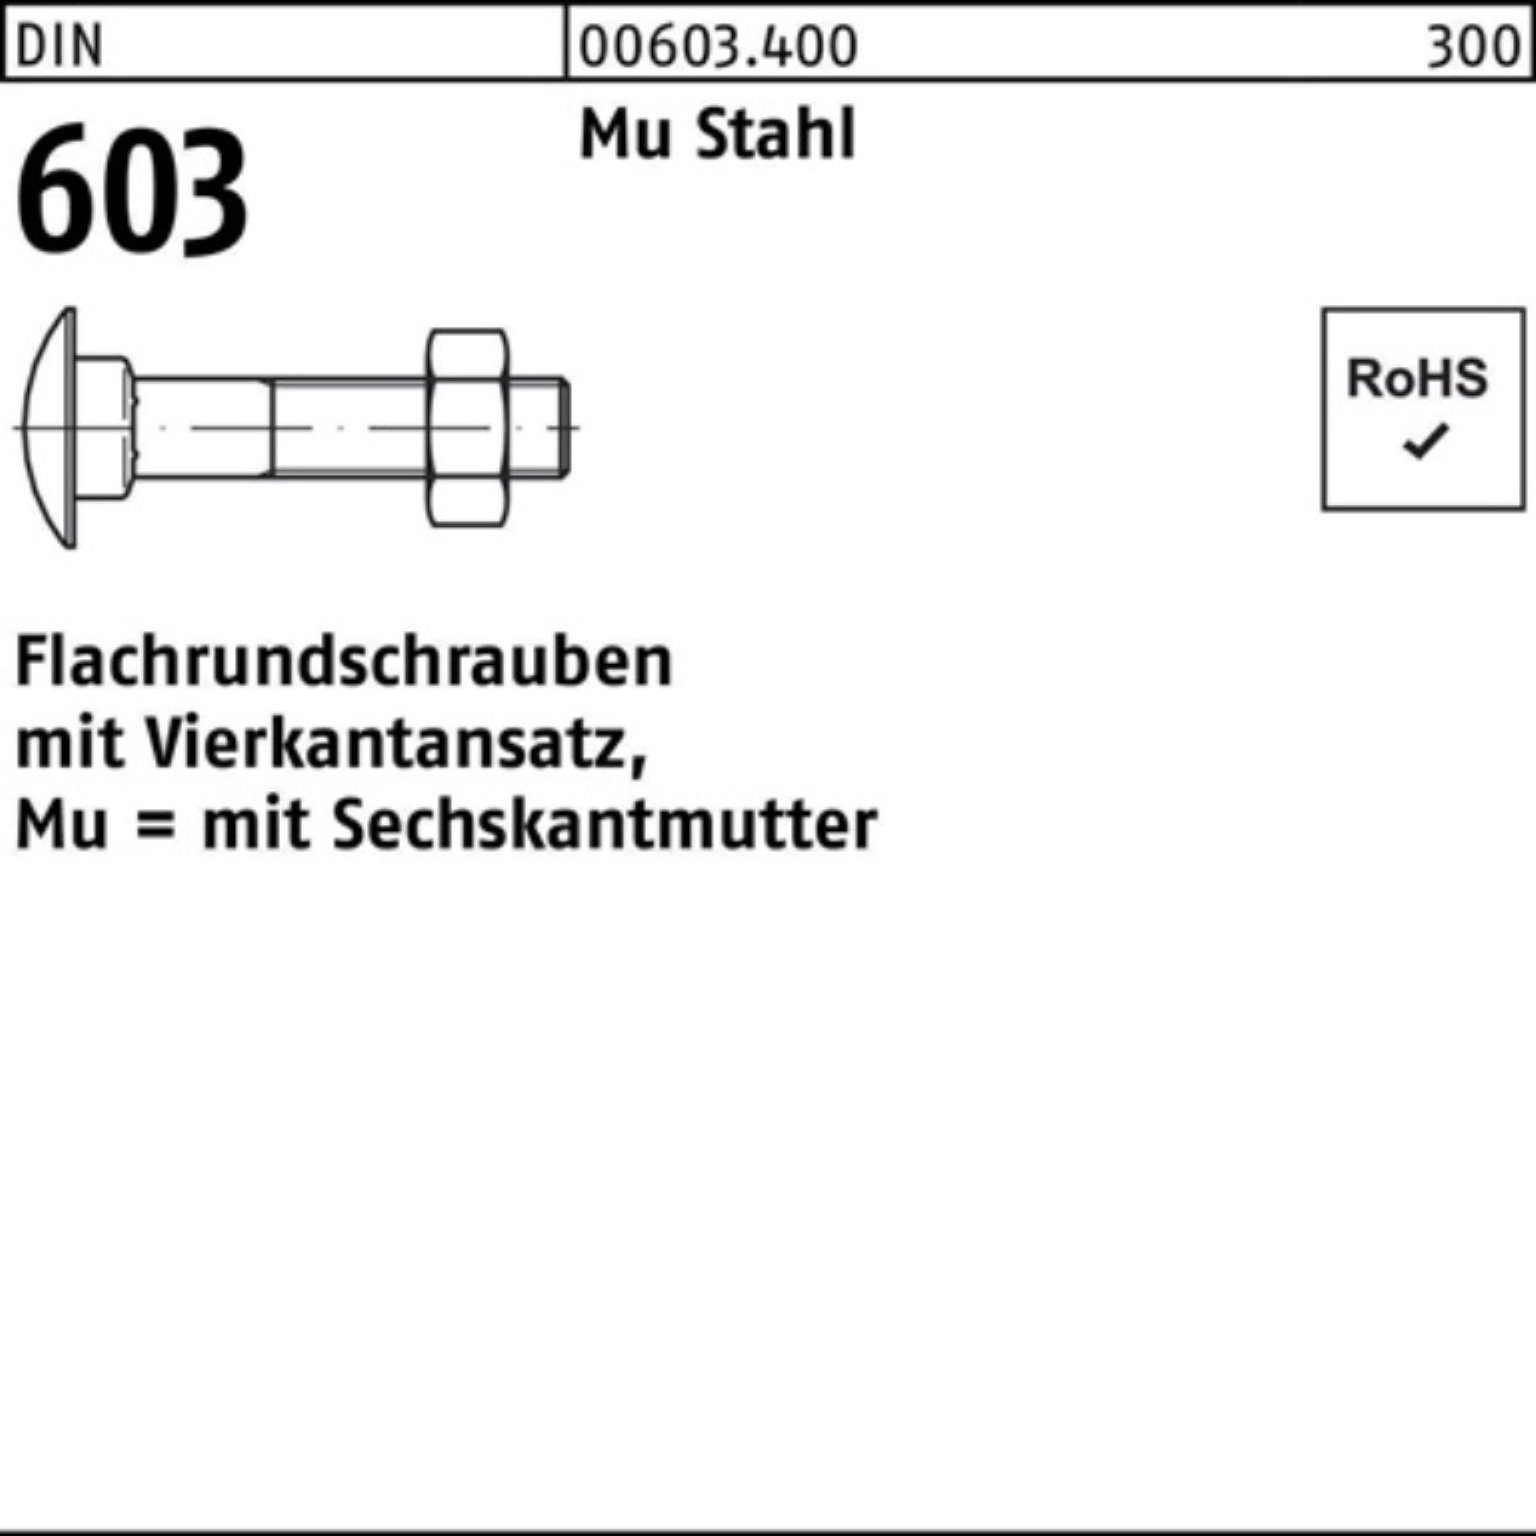 Flachrundschraube Schraube Pack Reyher 100er M16x300 Vierkantansatz/6-ktmutter 603 DIN